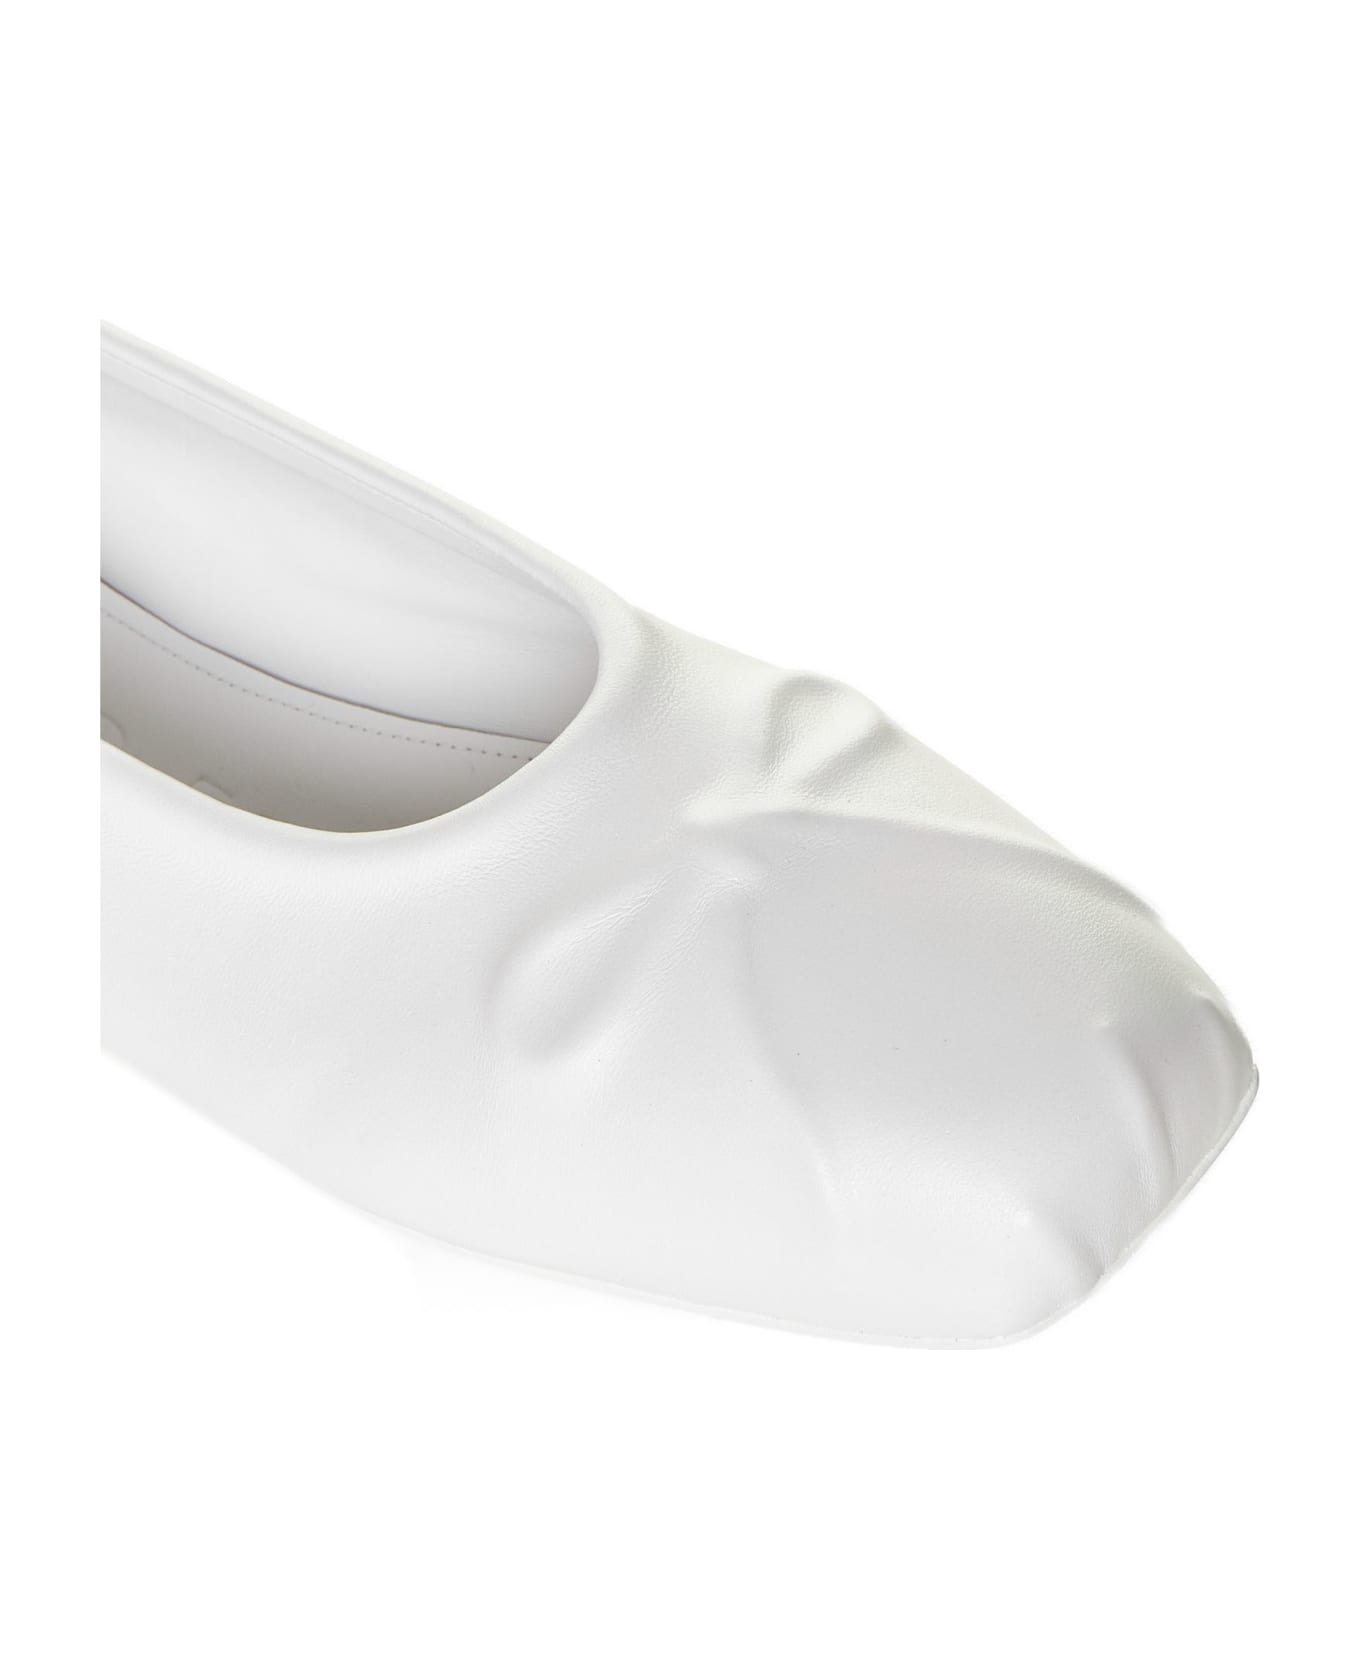 Marni Flat Shoes - Lily white